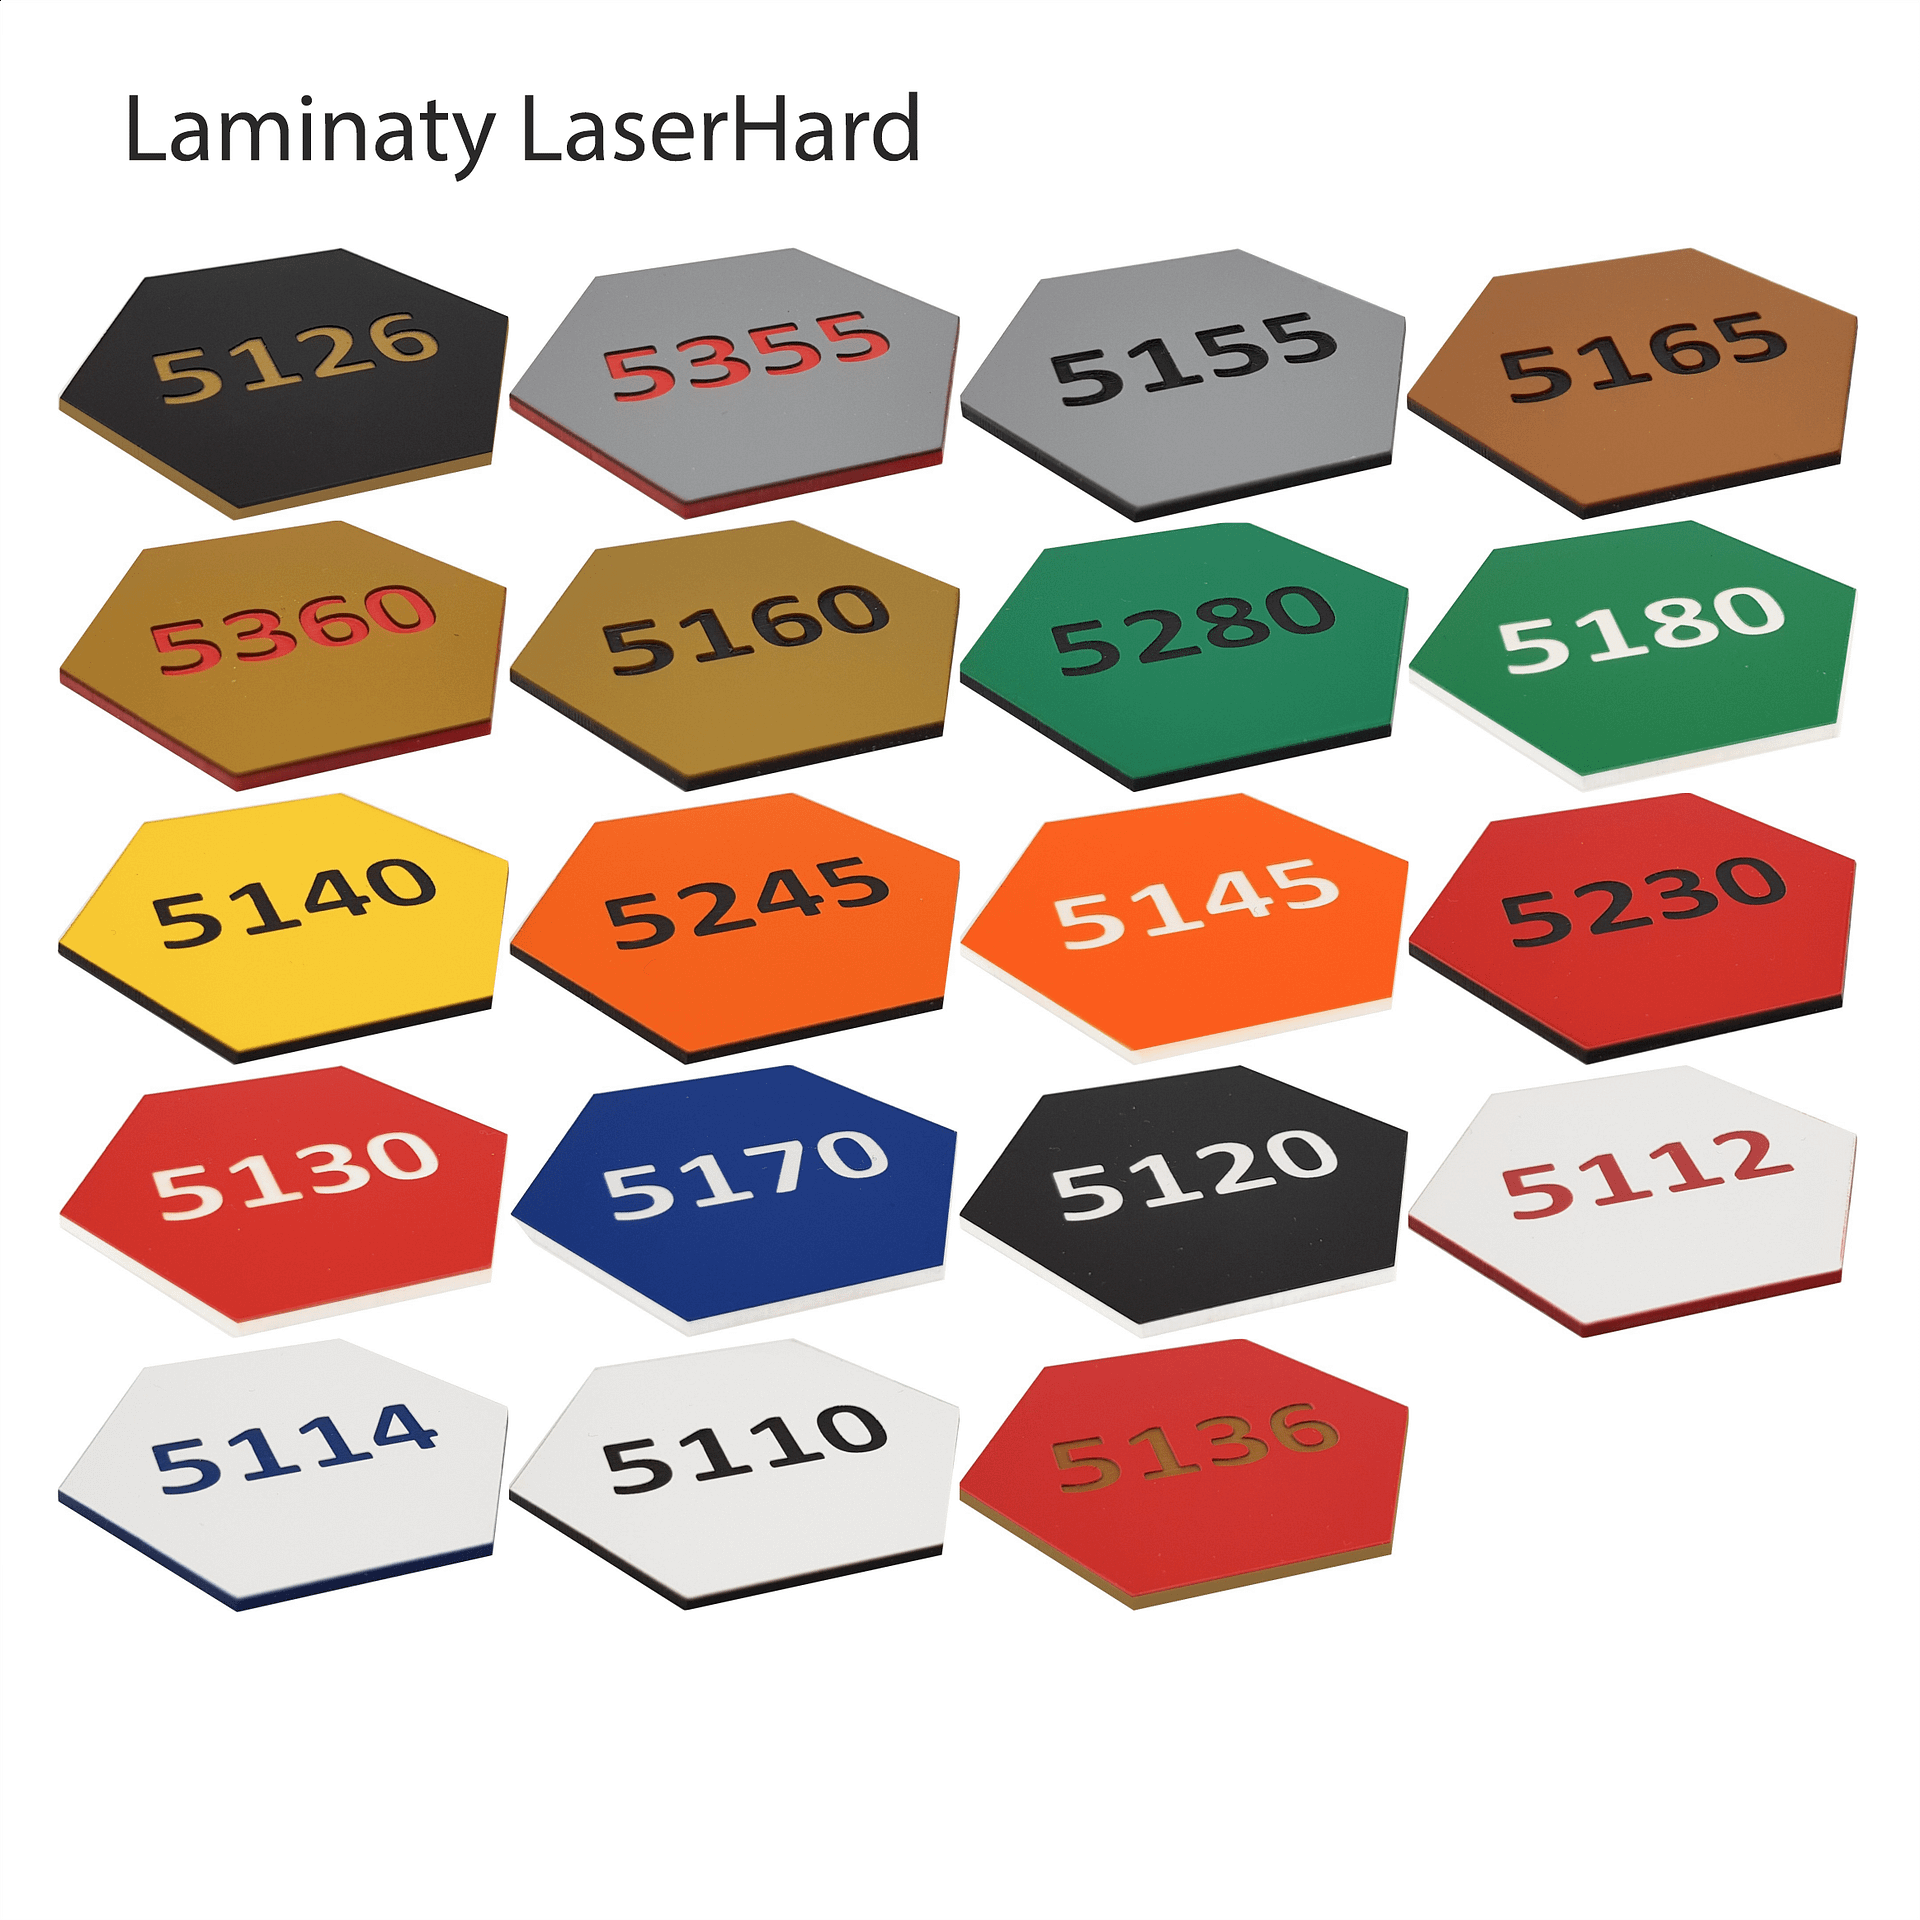 Laminaty LaserHard